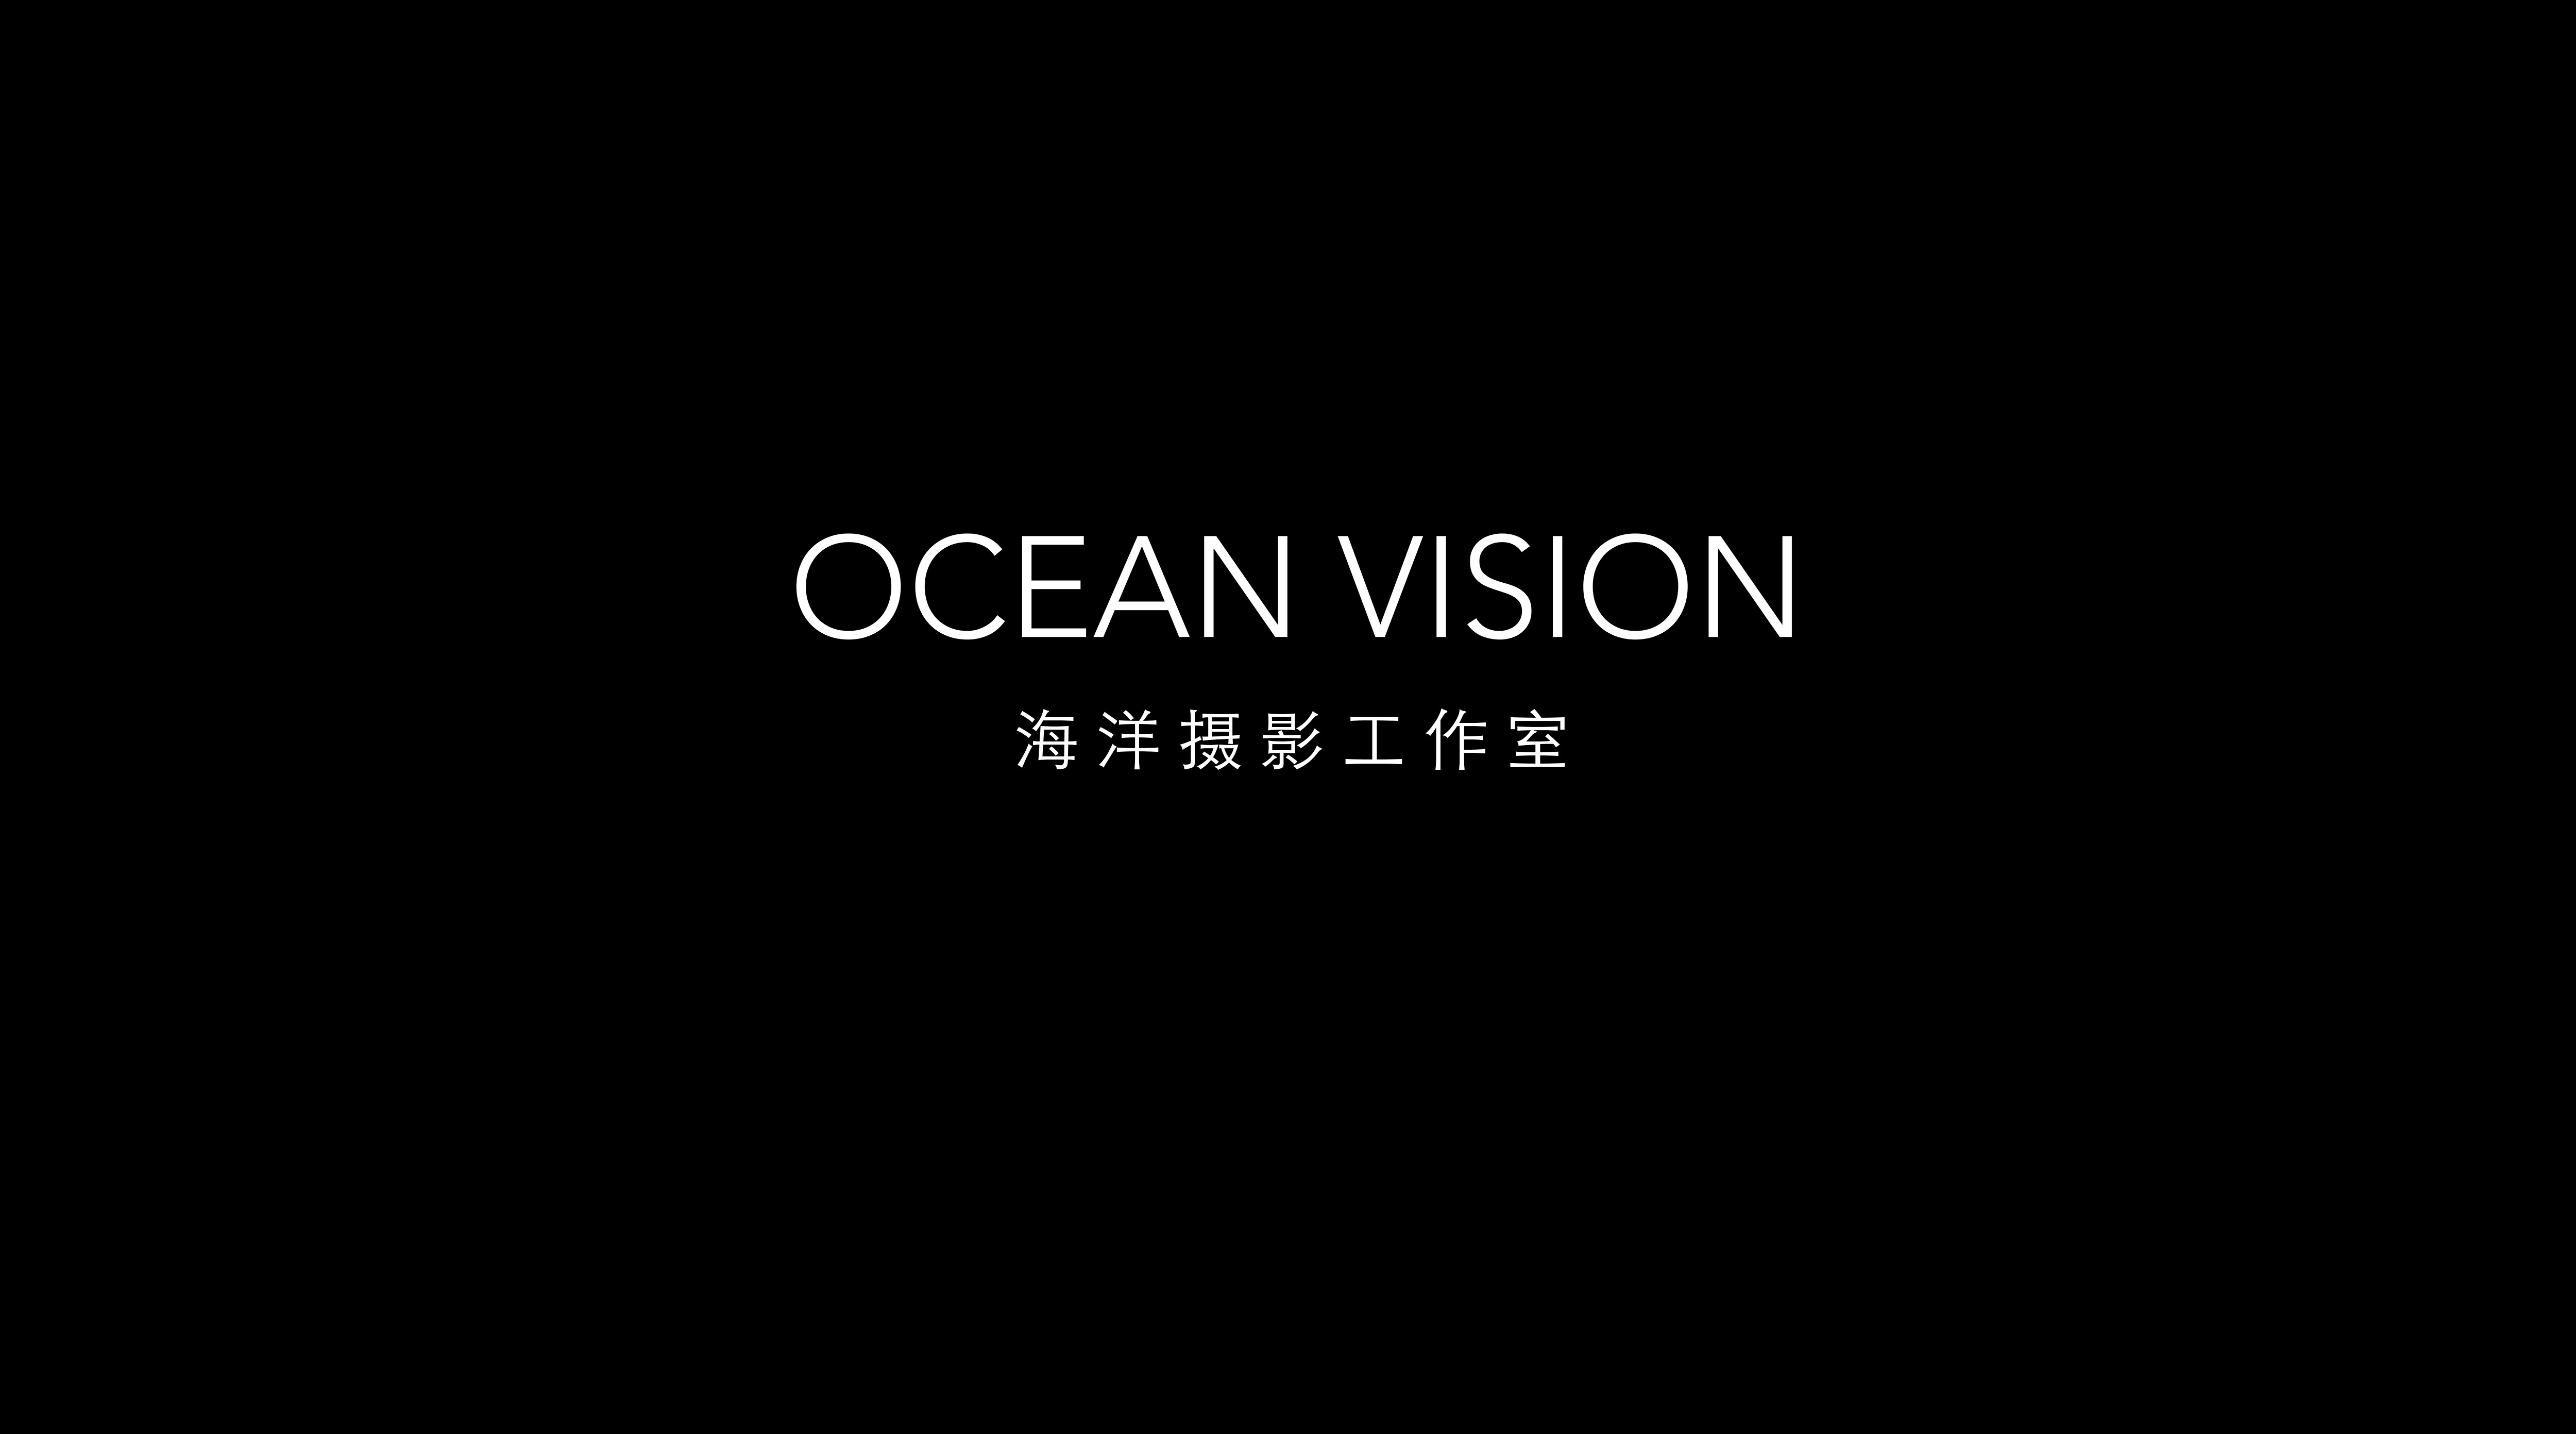 2018年8月12日 早拍晚播当日娶亲快剪【OCEAN VISION 出品】 